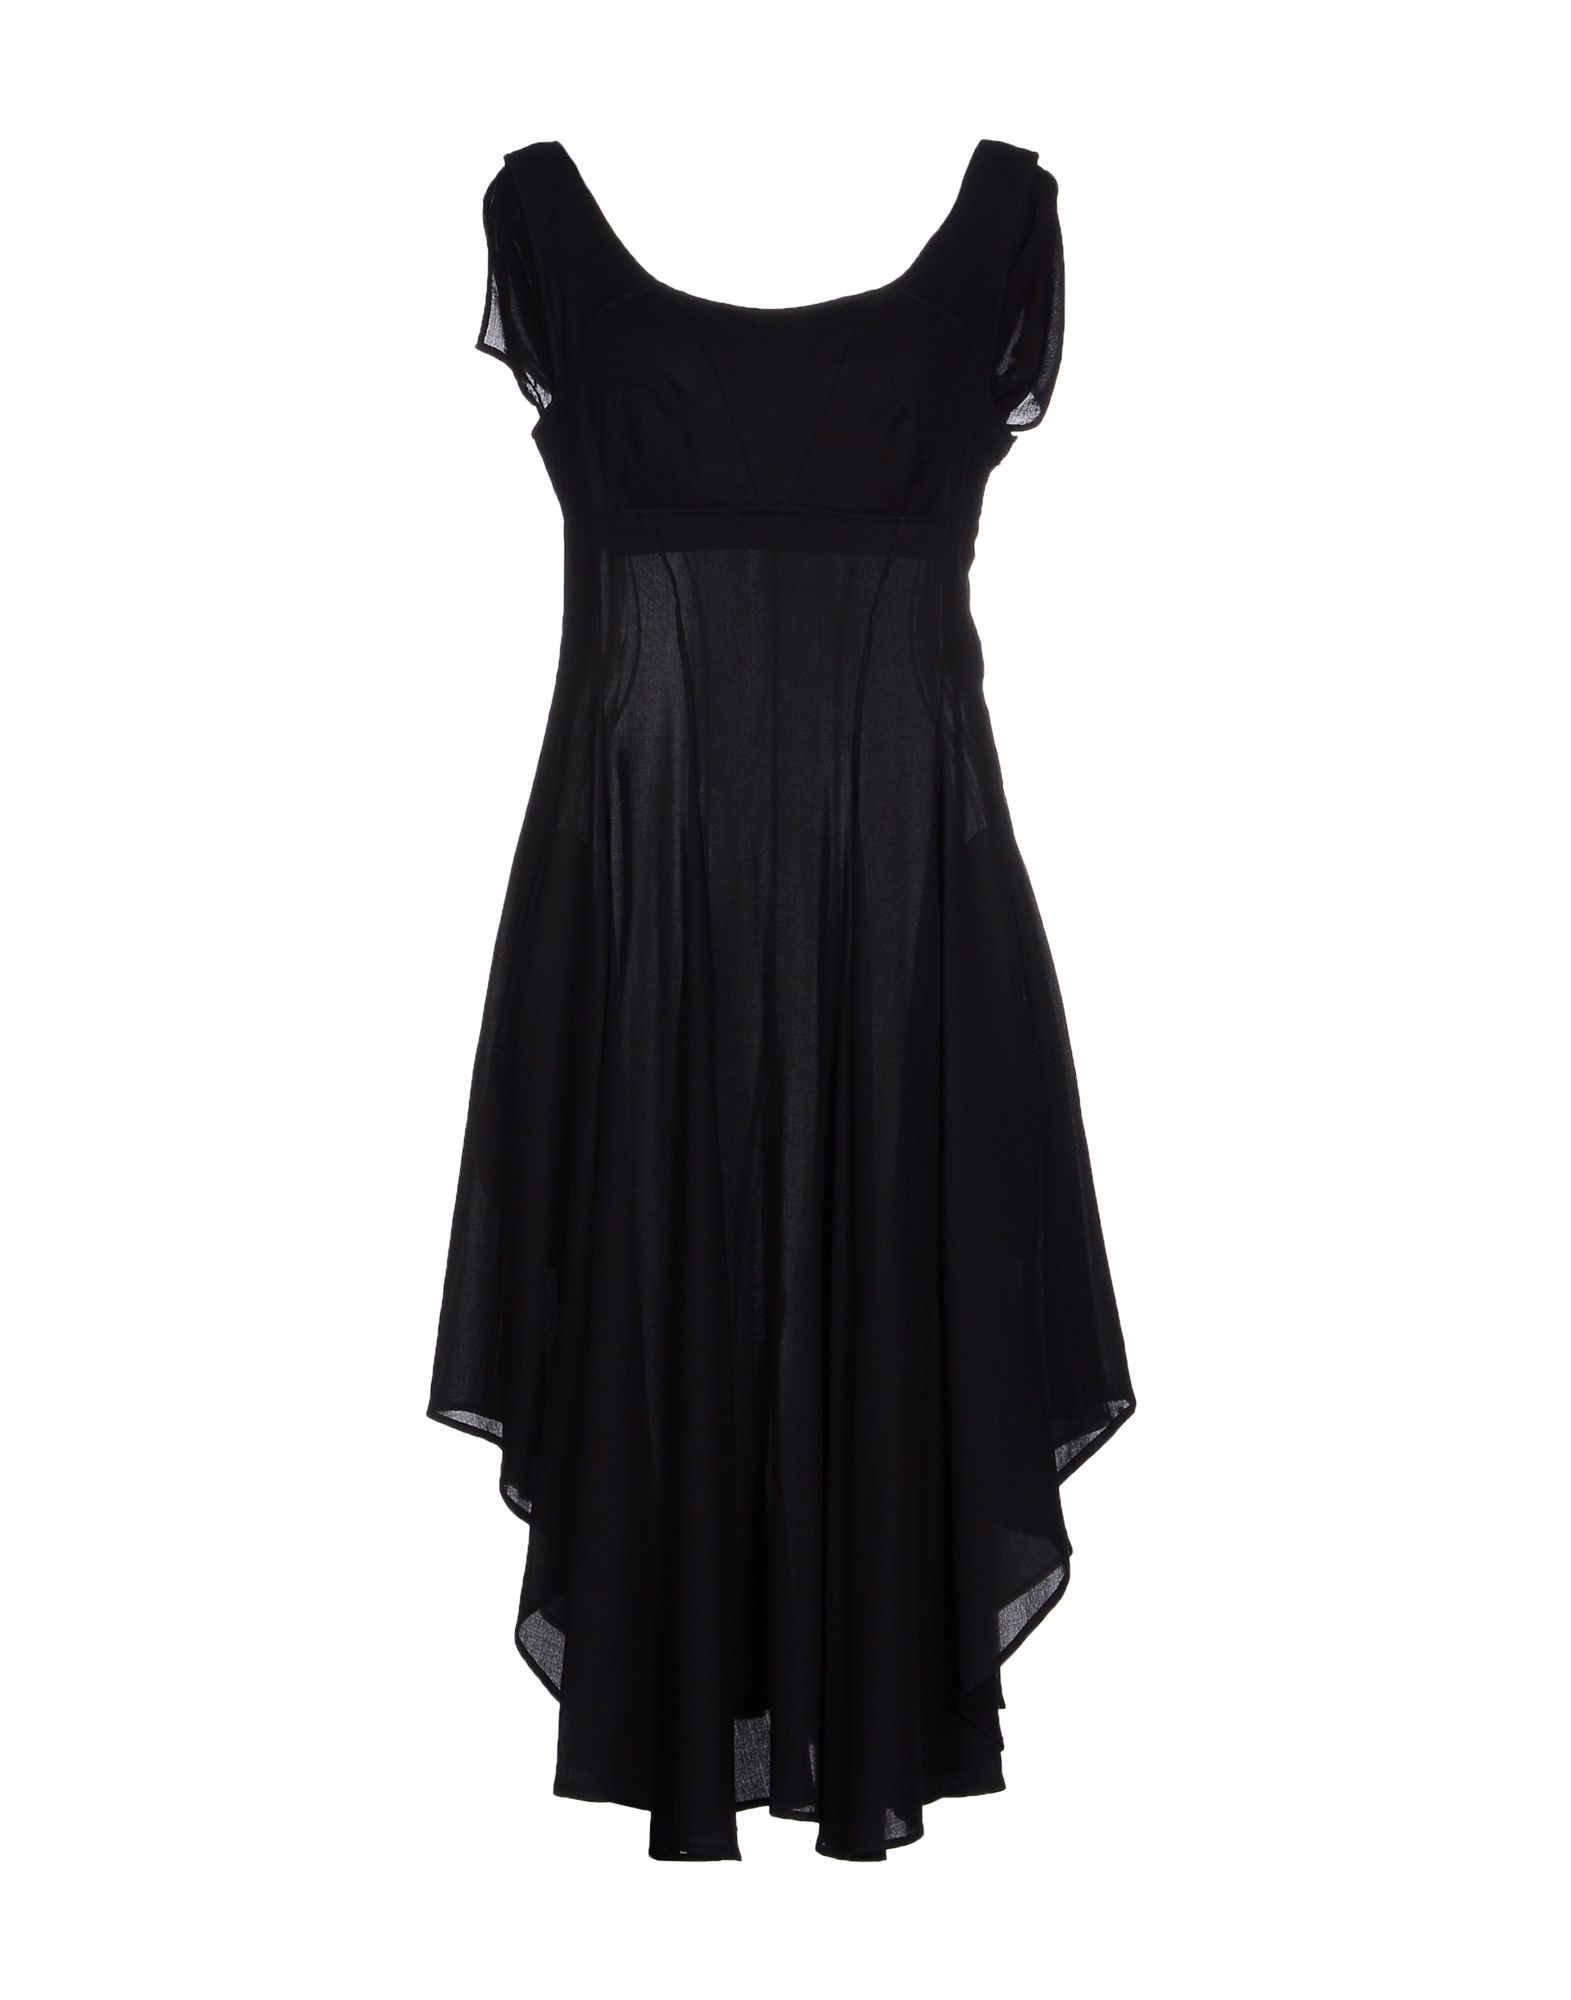 Lyst - Yohji Yamamoto 3/4 Length Dress in Black